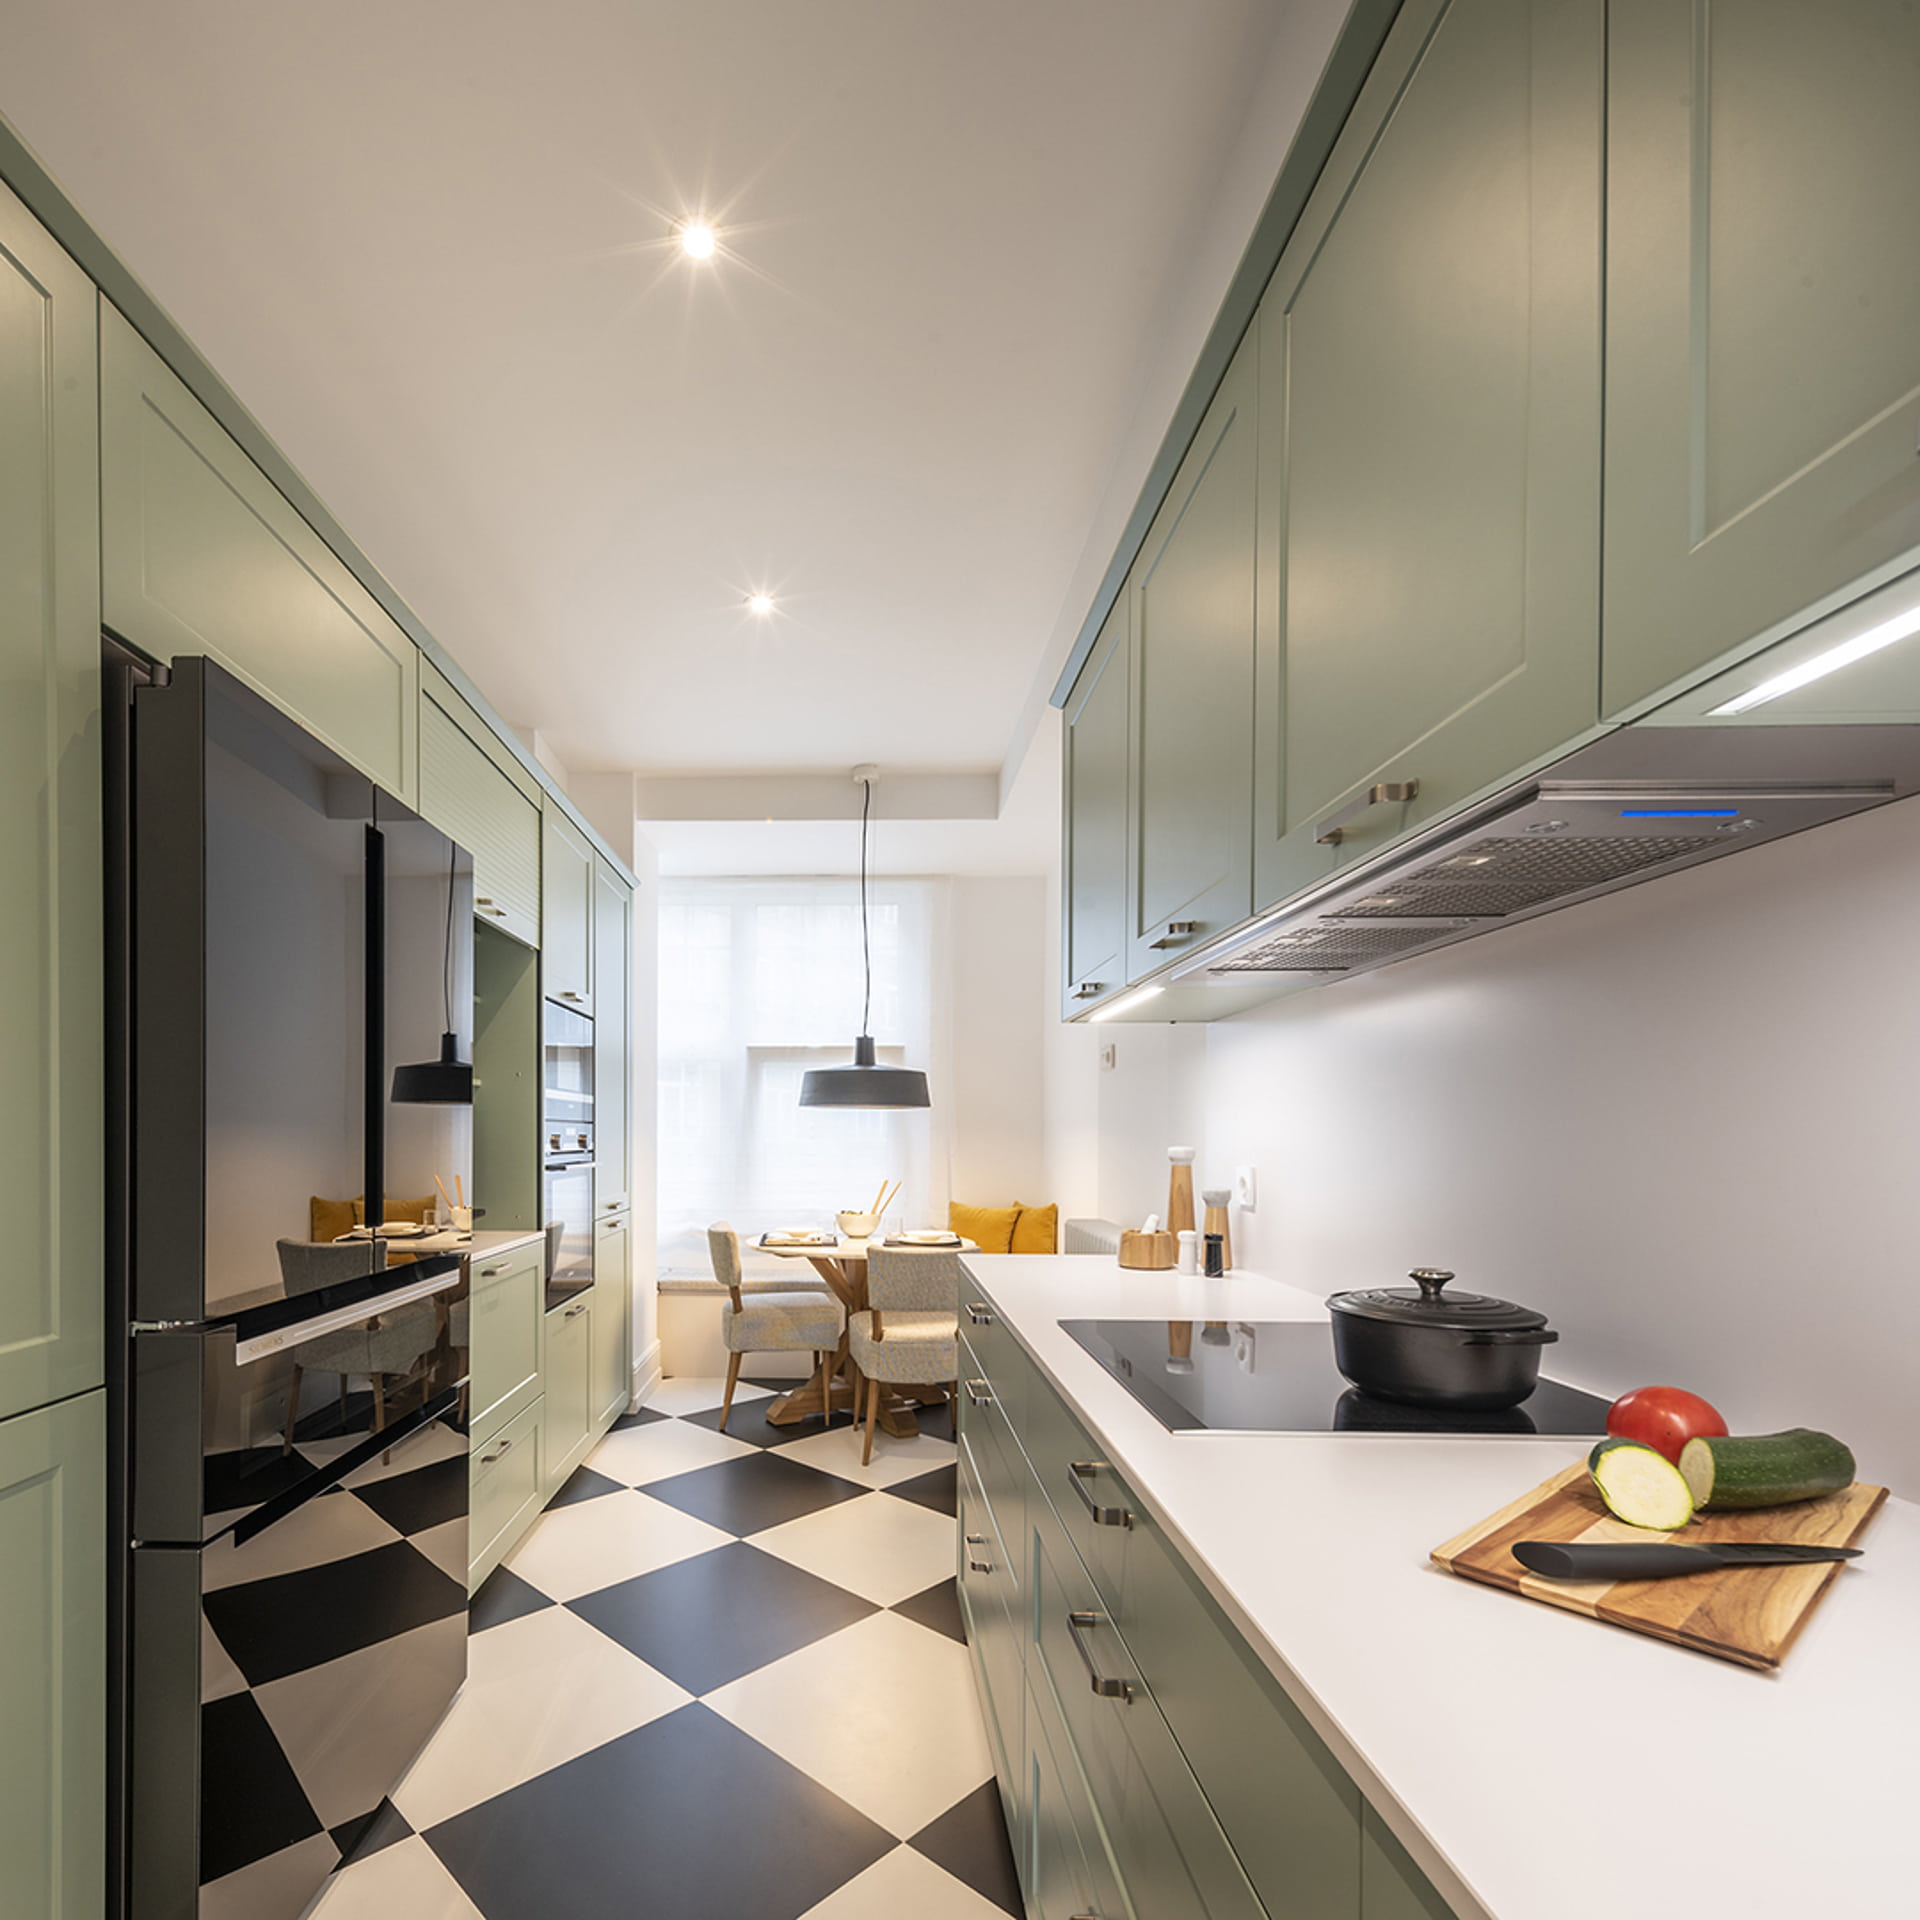 Green Santos kitchen in renovated flat